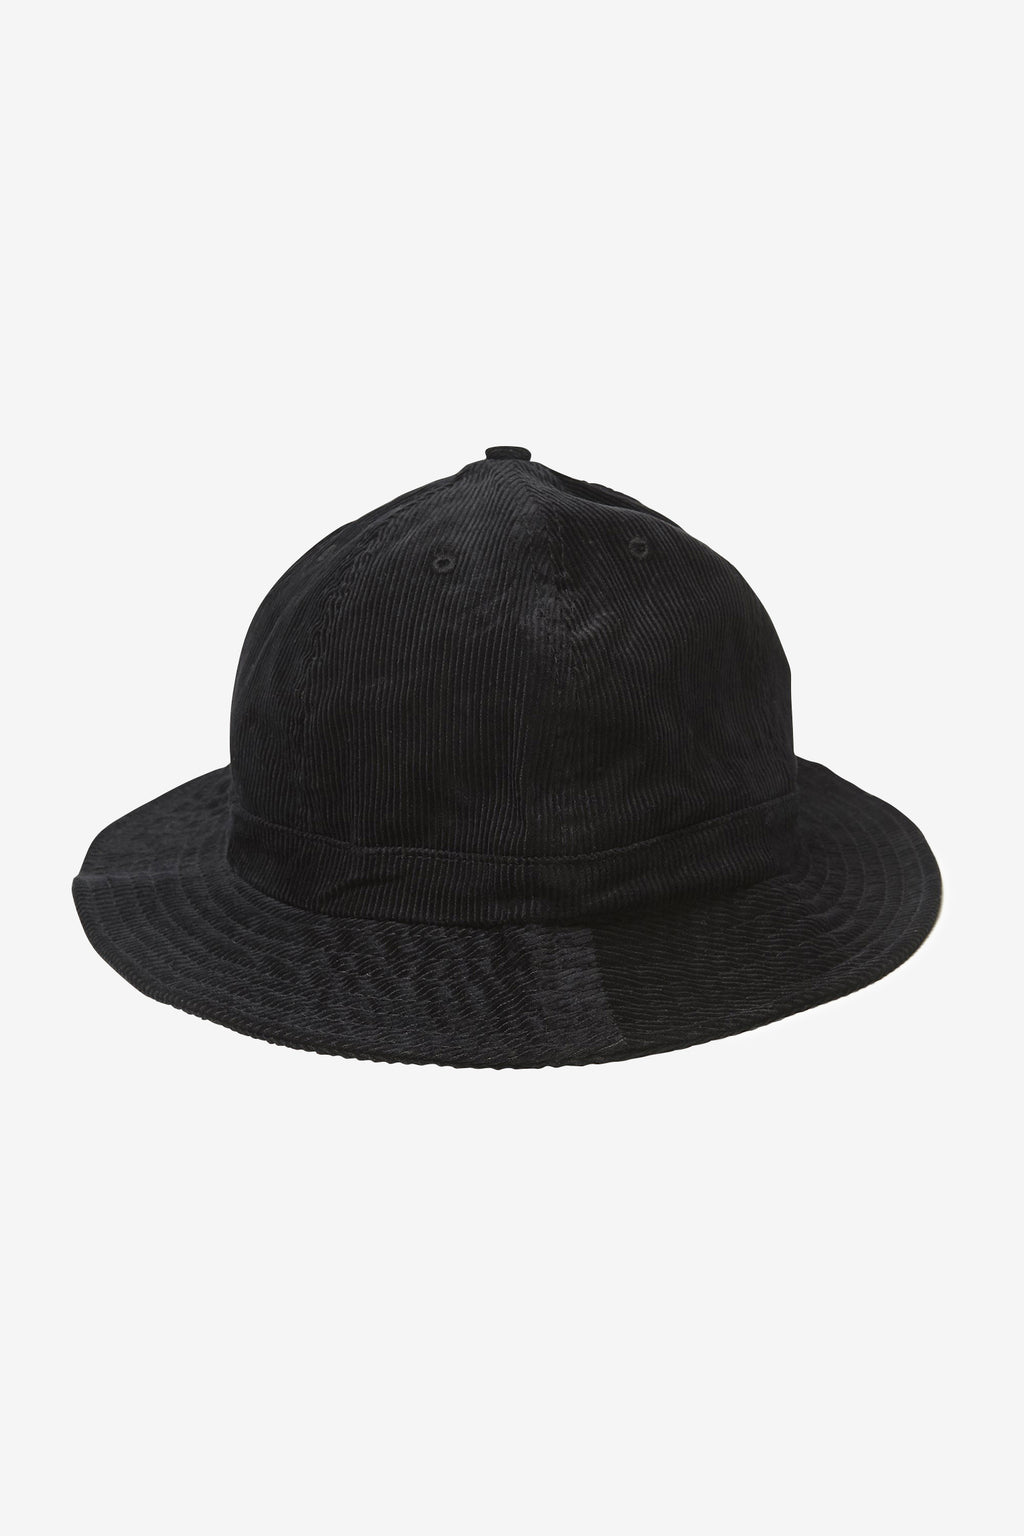 Blacksmith - Corduroy Bell Bucket Hat - Black